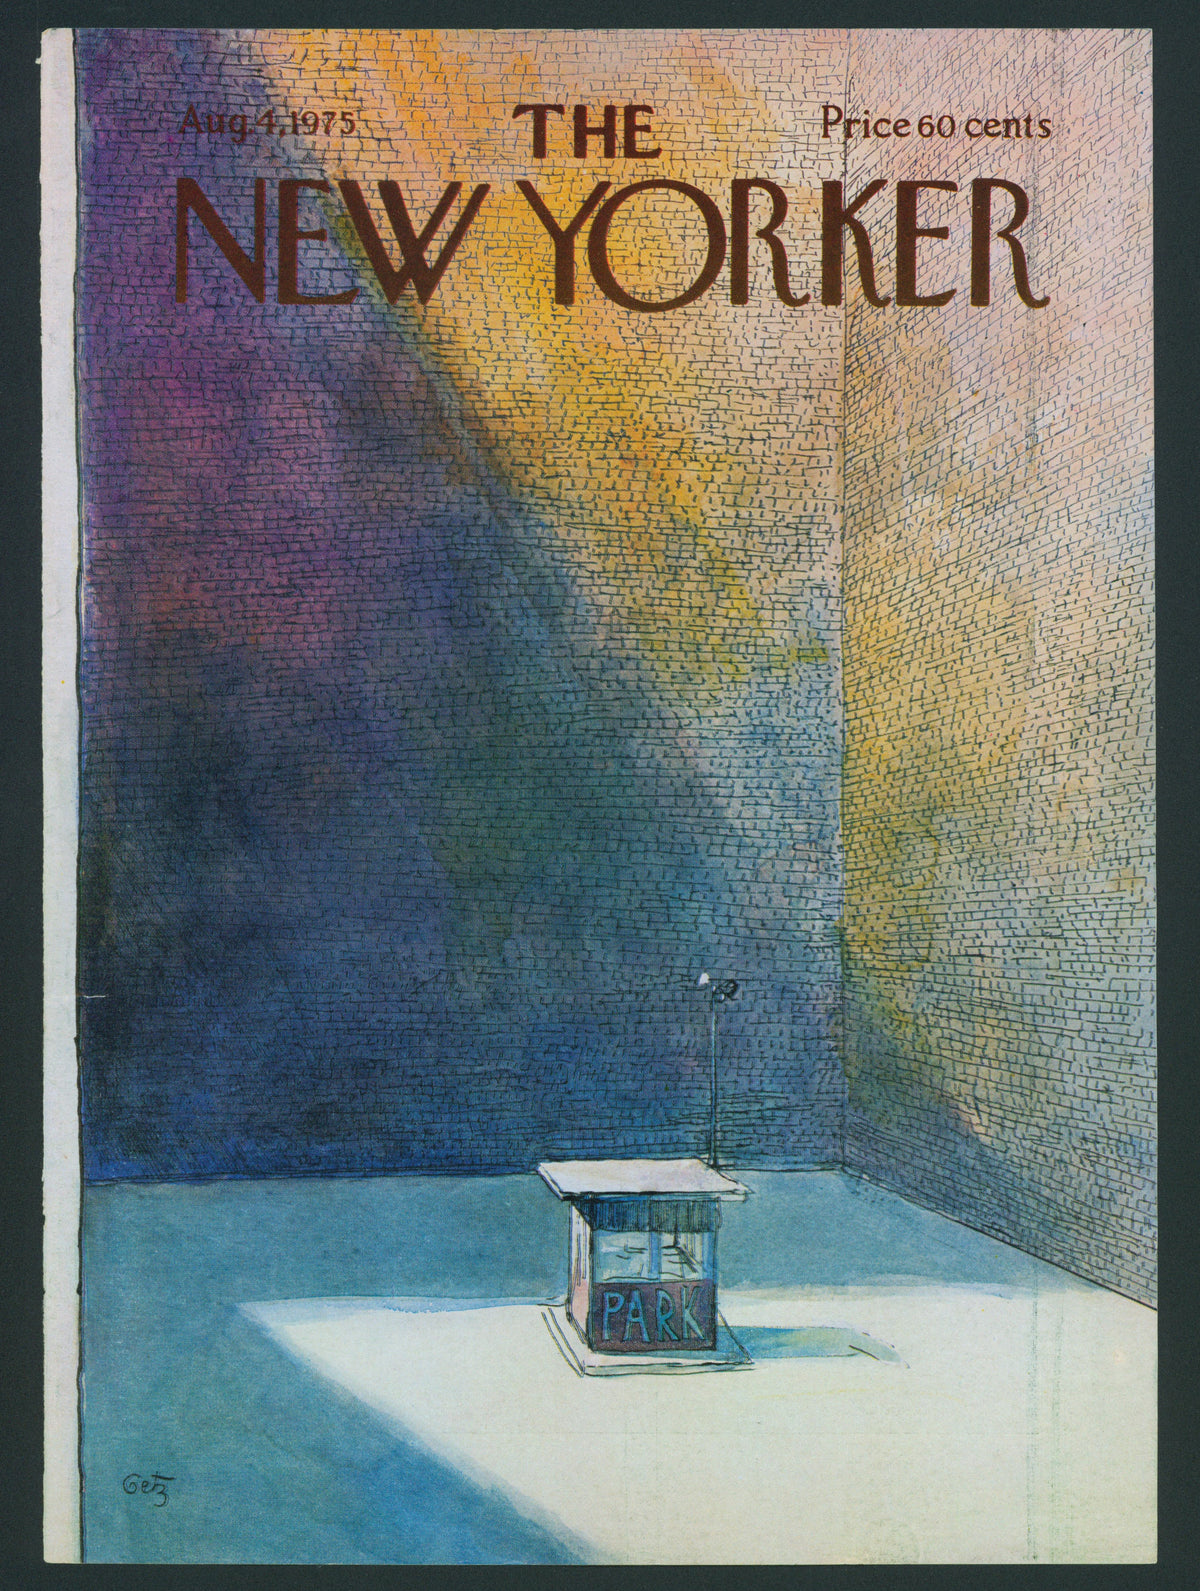 Park Watch- The New Yorker - Authentic Vintage Antique Print